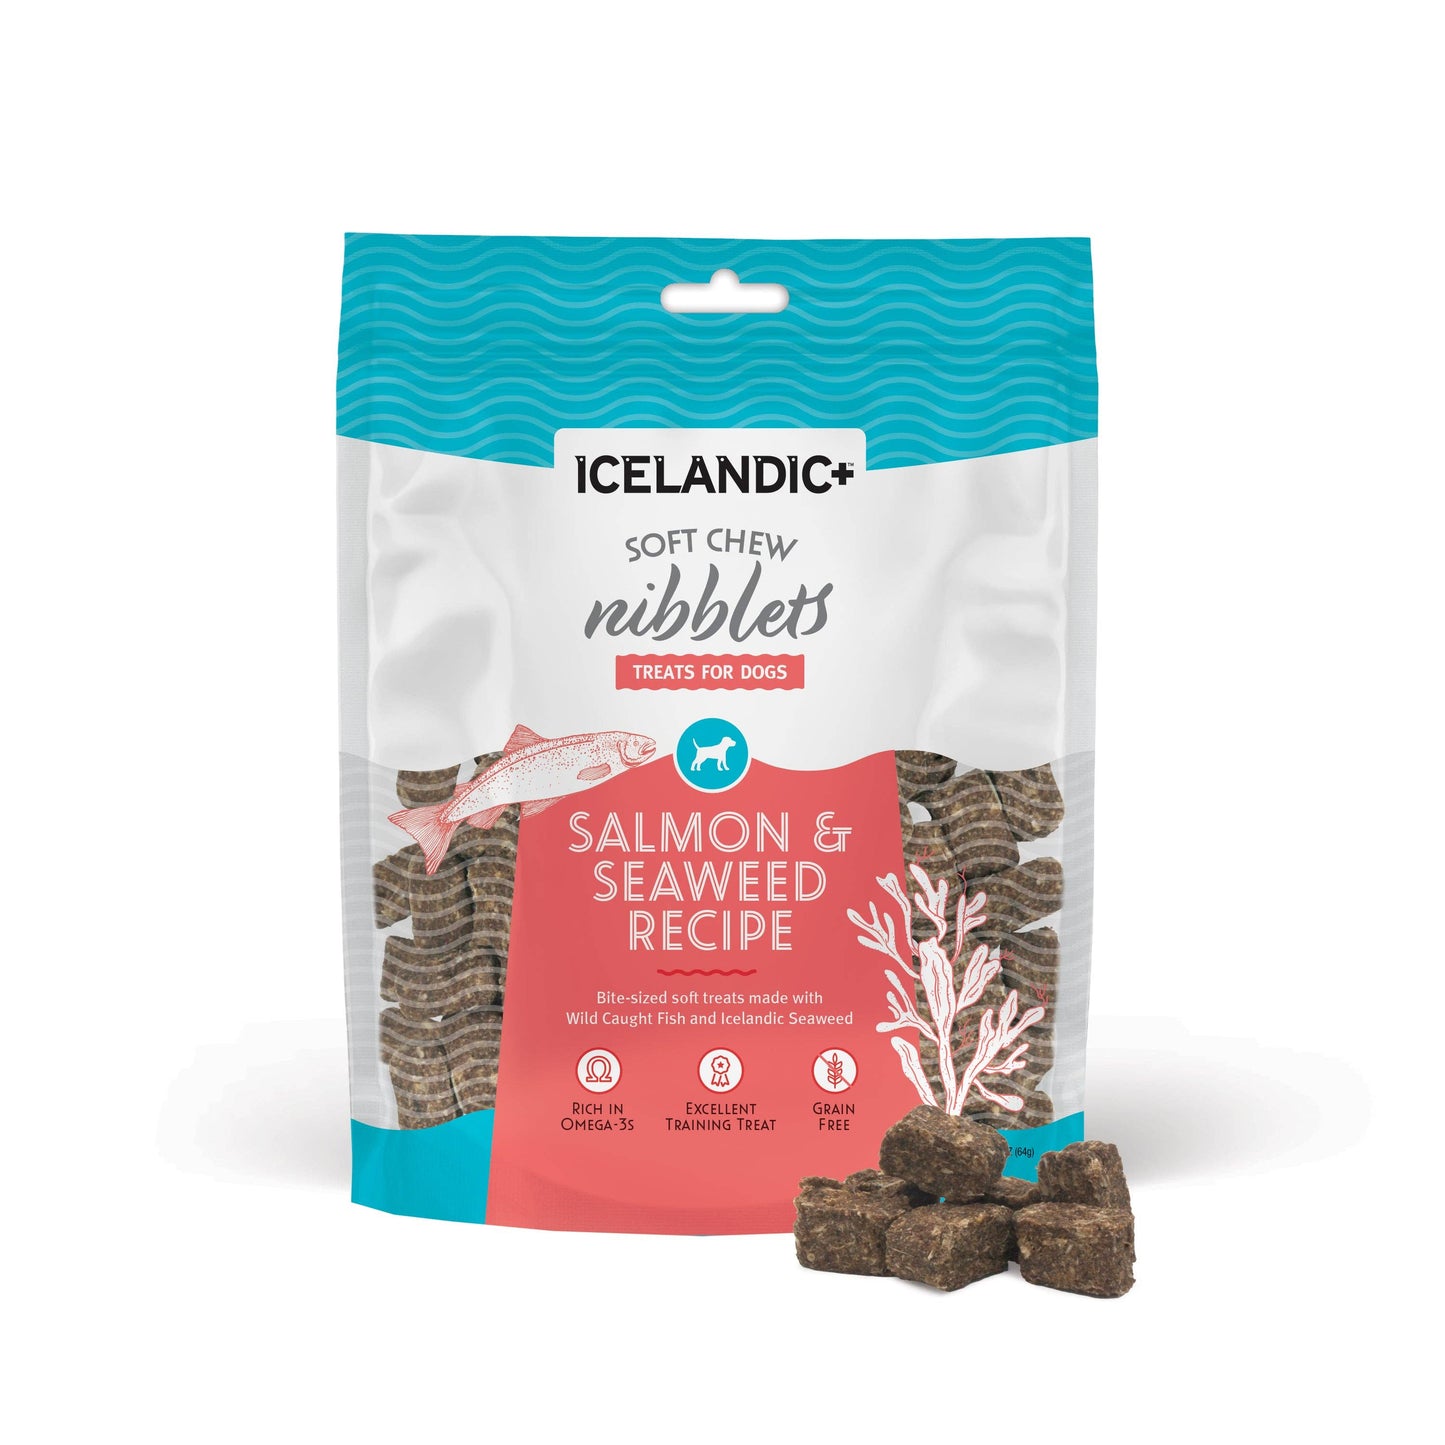 Icelandic+ Soft Chew Nibblets Salmon & Seaweed Dog Treats